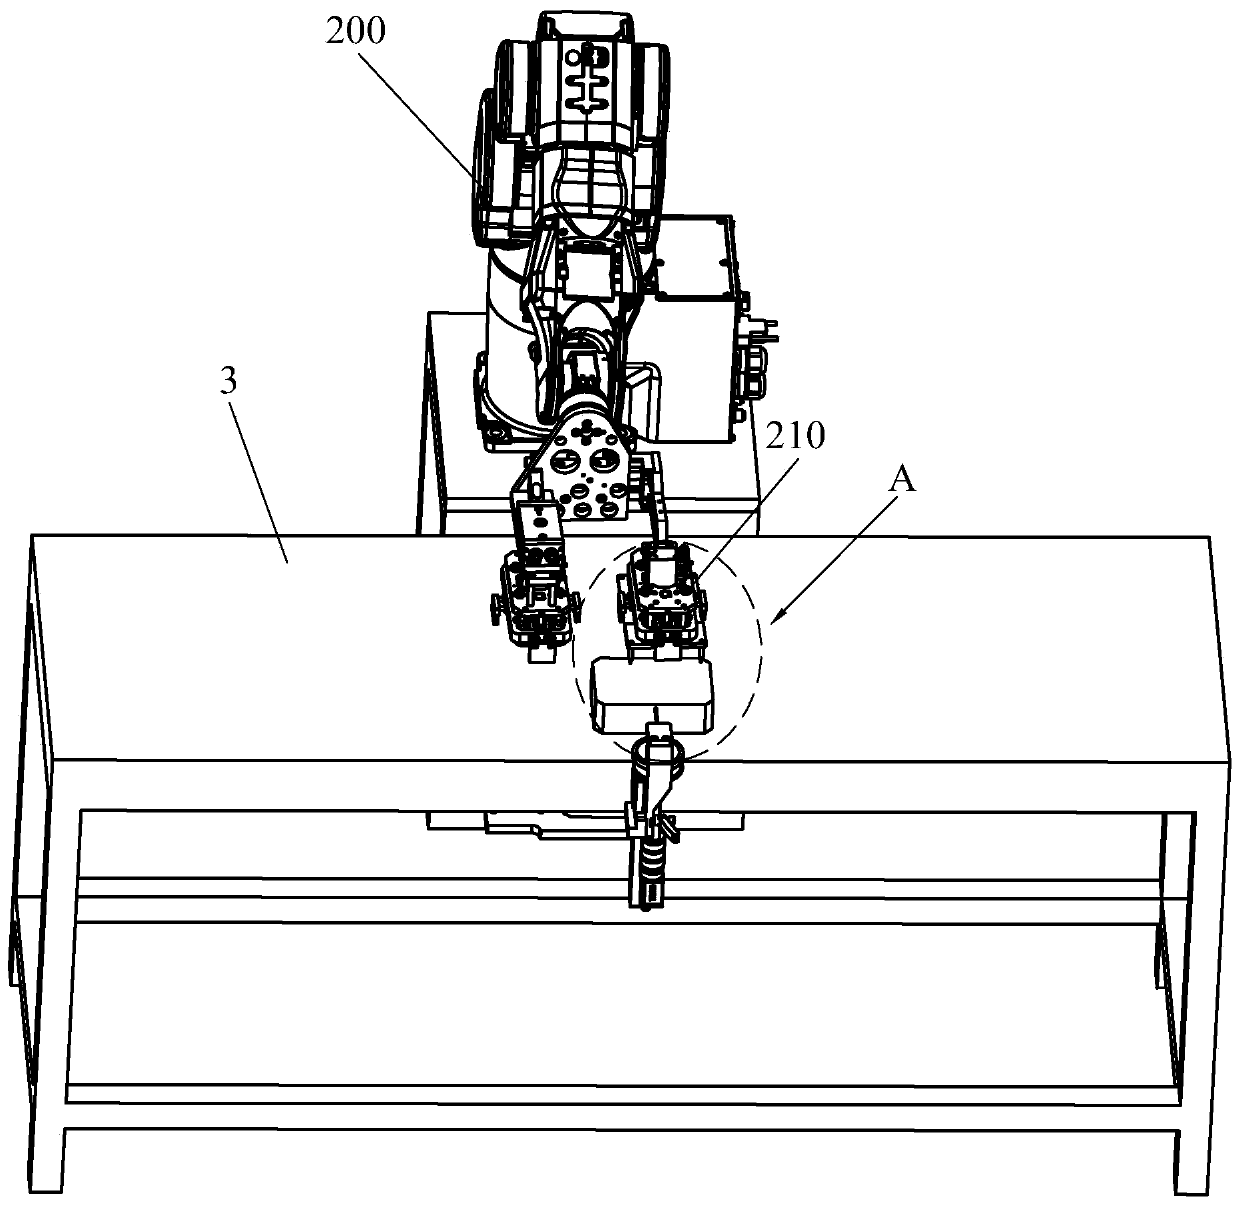 Robot movement plane calibration system and method